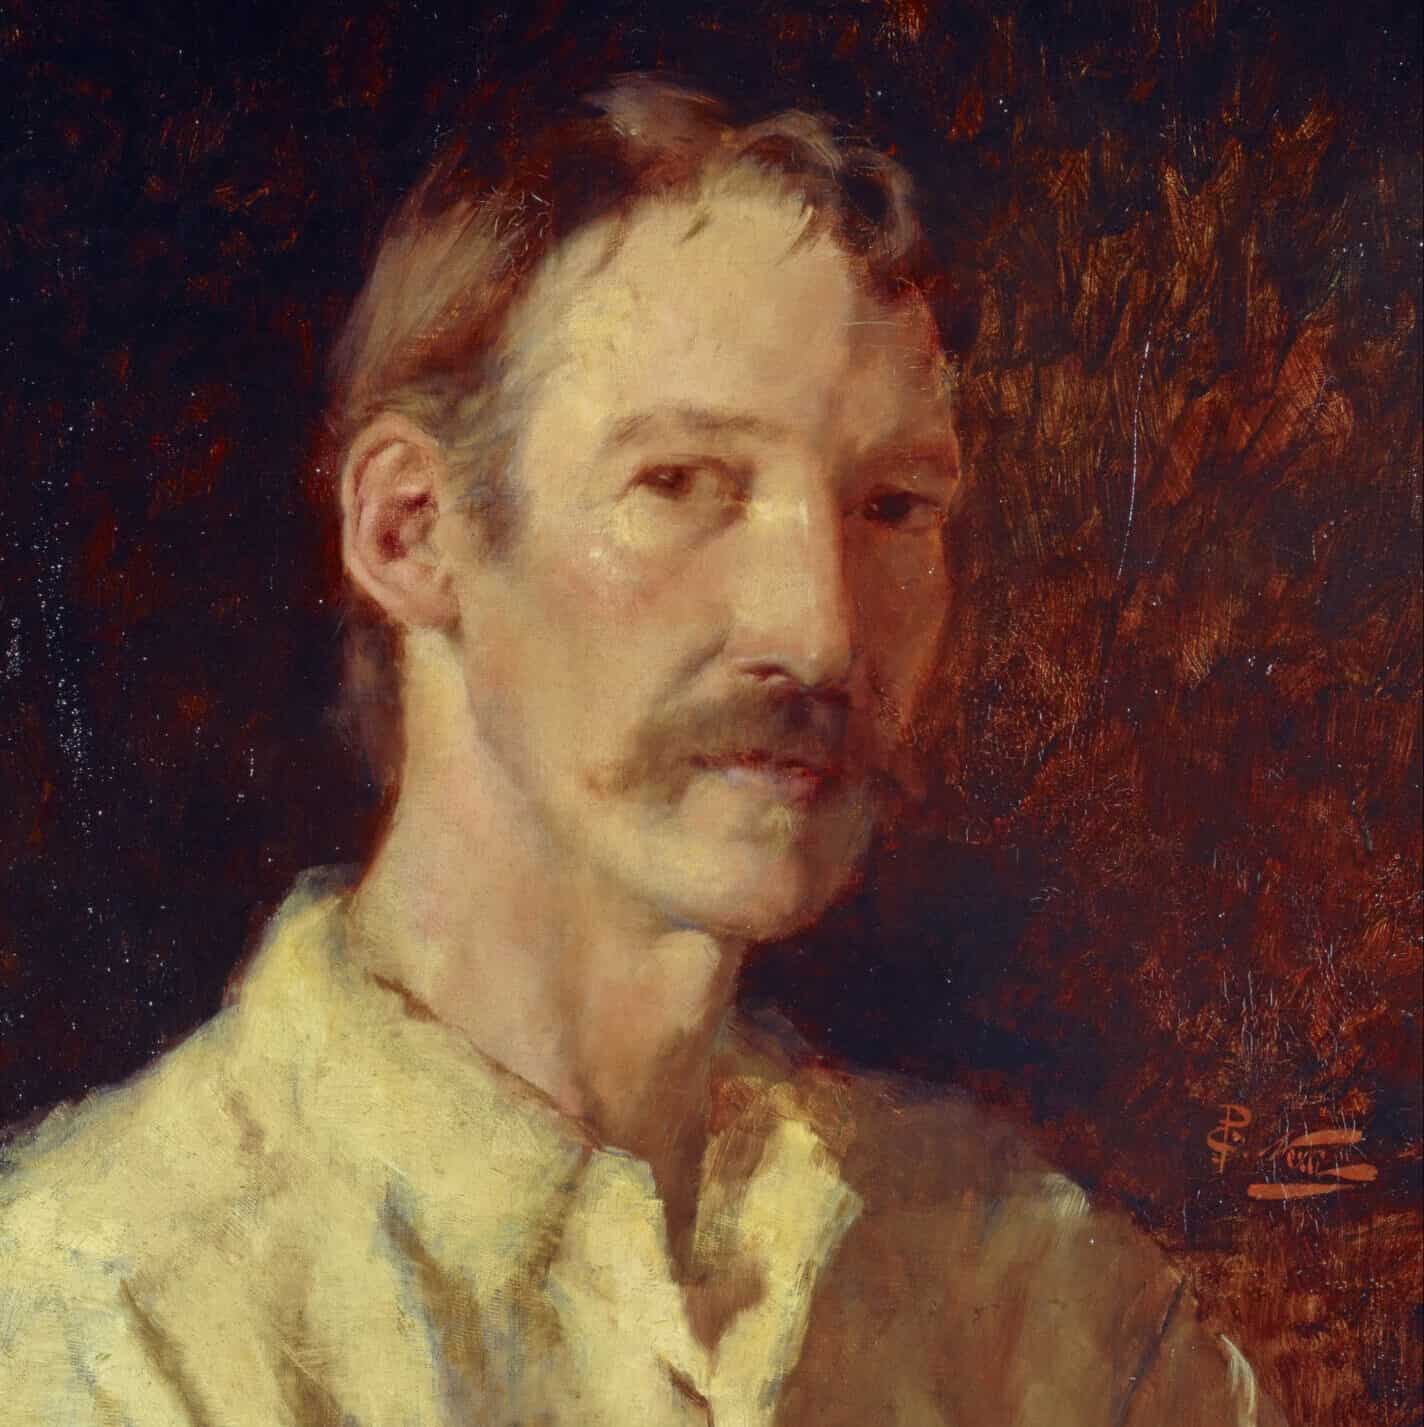 Girolamo Nerli - Portrait de Robert Louis Stevenson (1892)